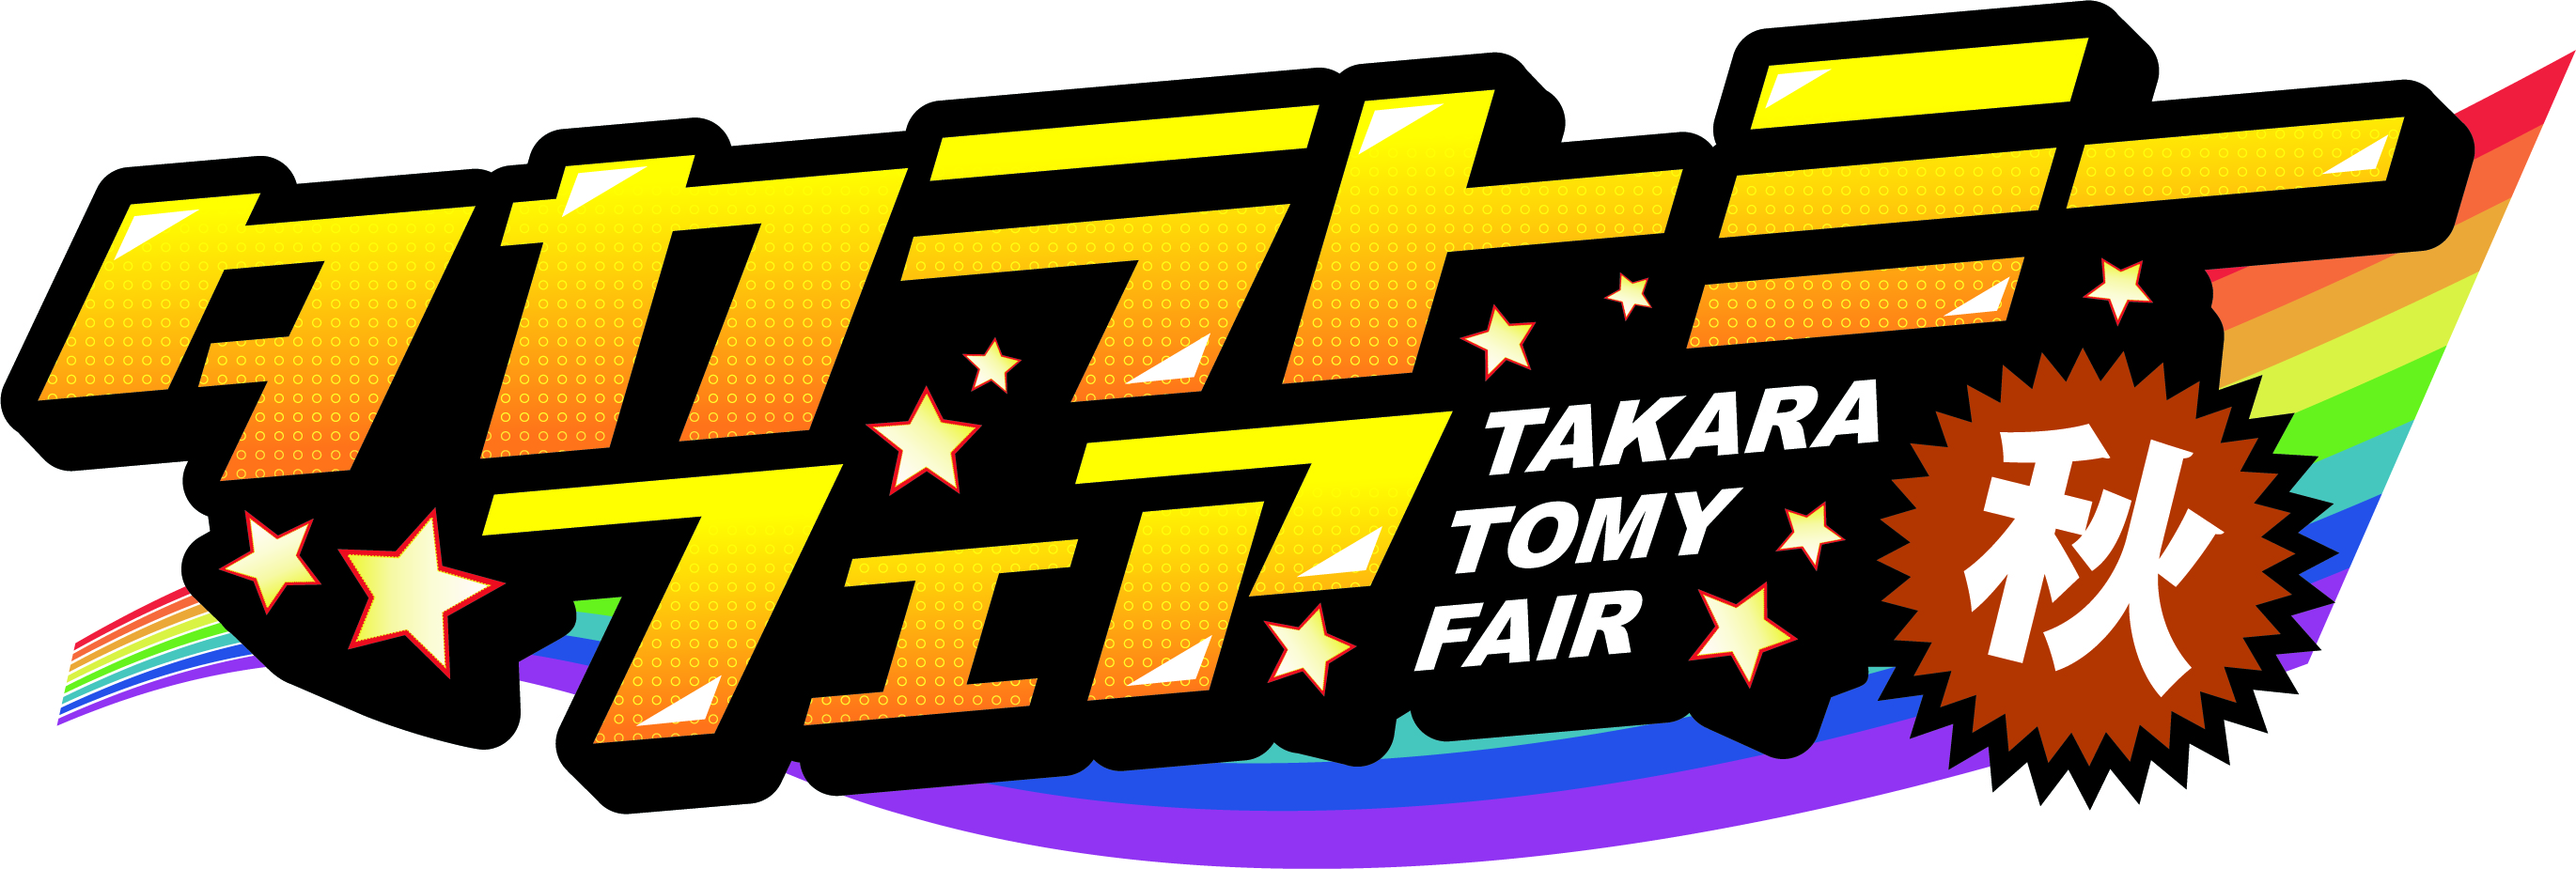 takaratomy_fair_logo_autumn